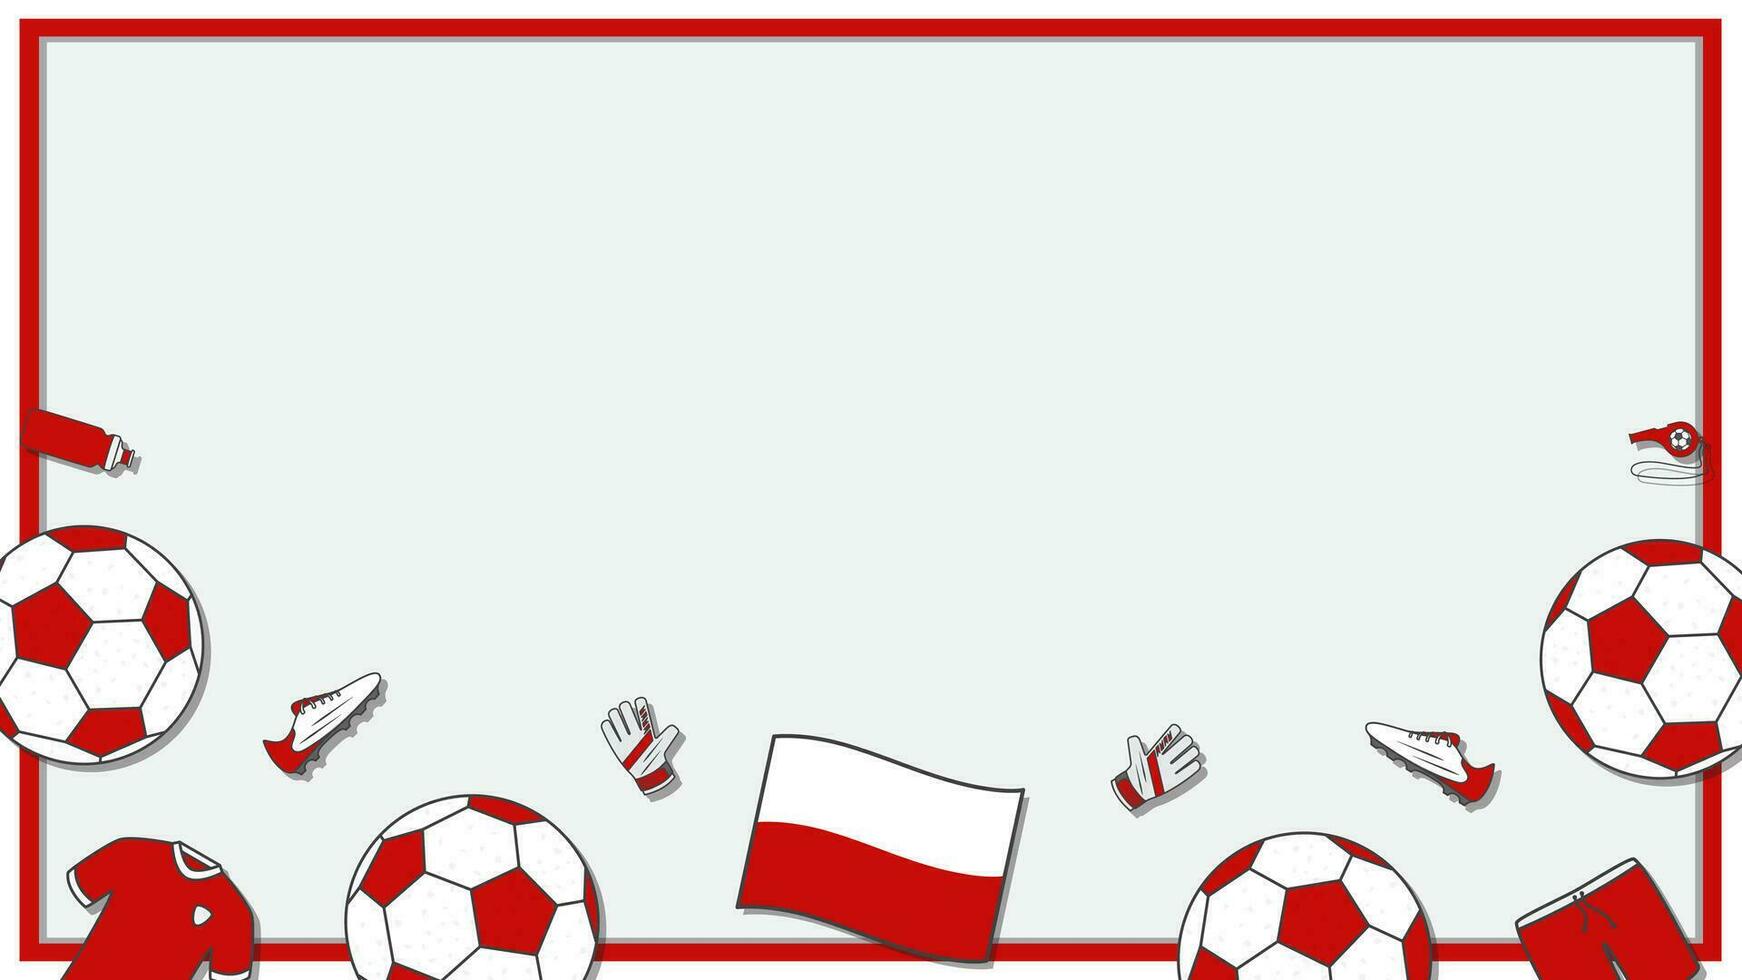 Amerikaans voetbal achtergrond ontwerp sjabloon. Amerikaans voetbal tekenfilm vector illustratie. voetbal in Polen